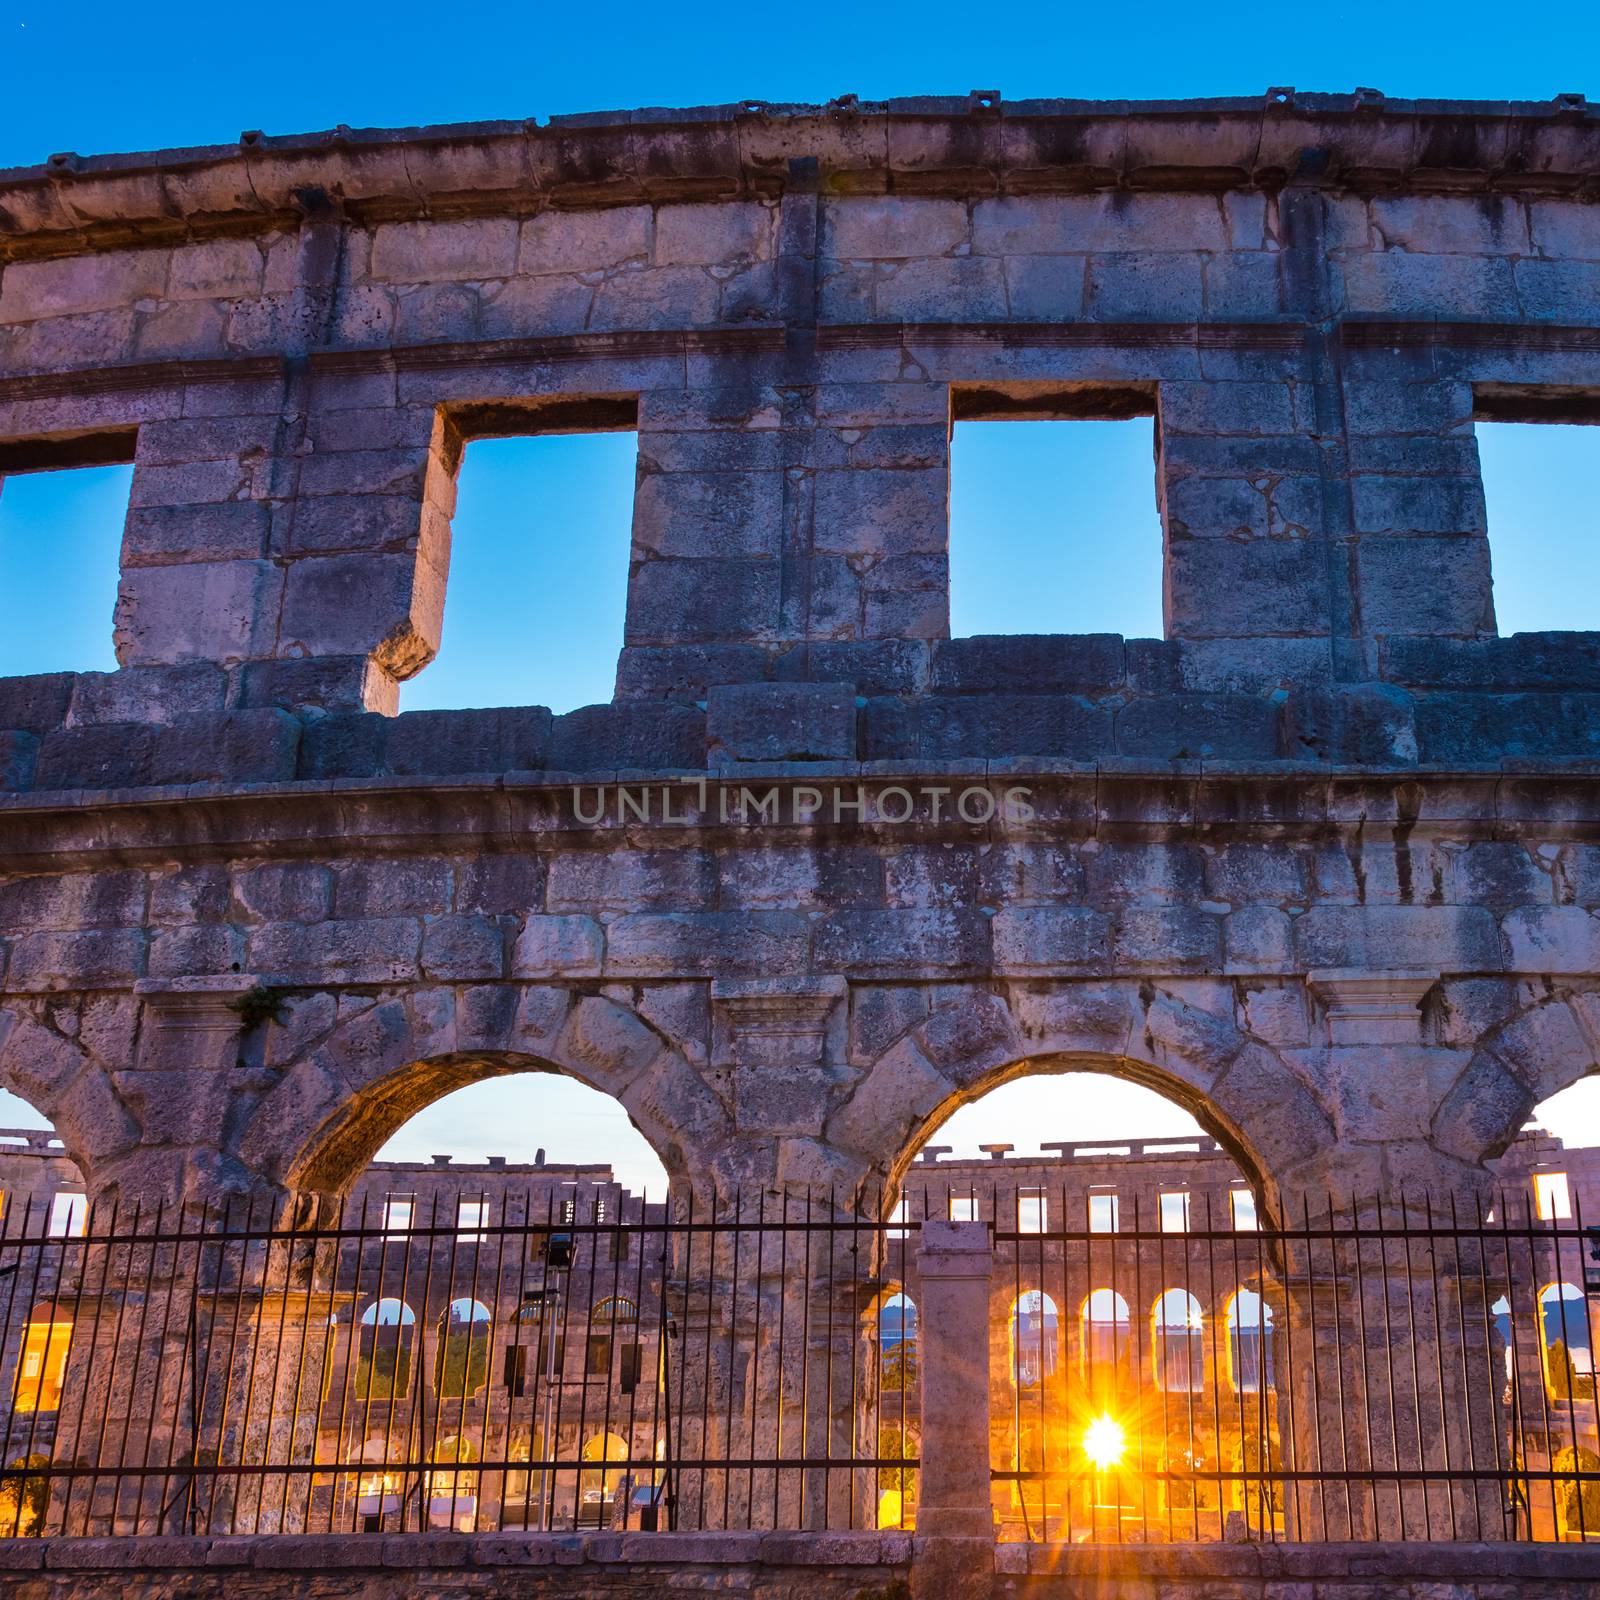 The Roman Amphitheater of Pula, Croatia. by kasto